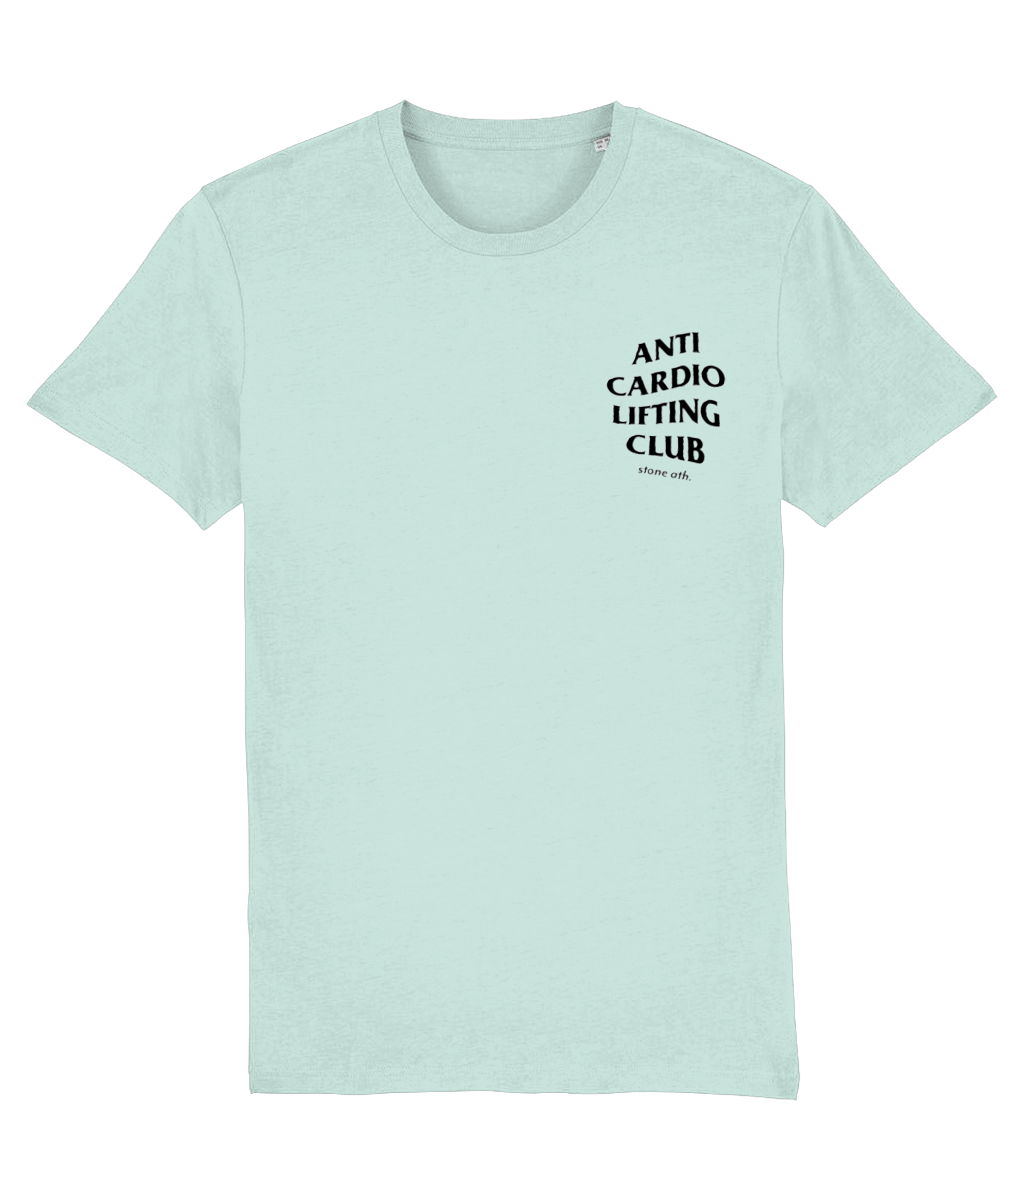 Anti Cardio Lifting Club t-shirt